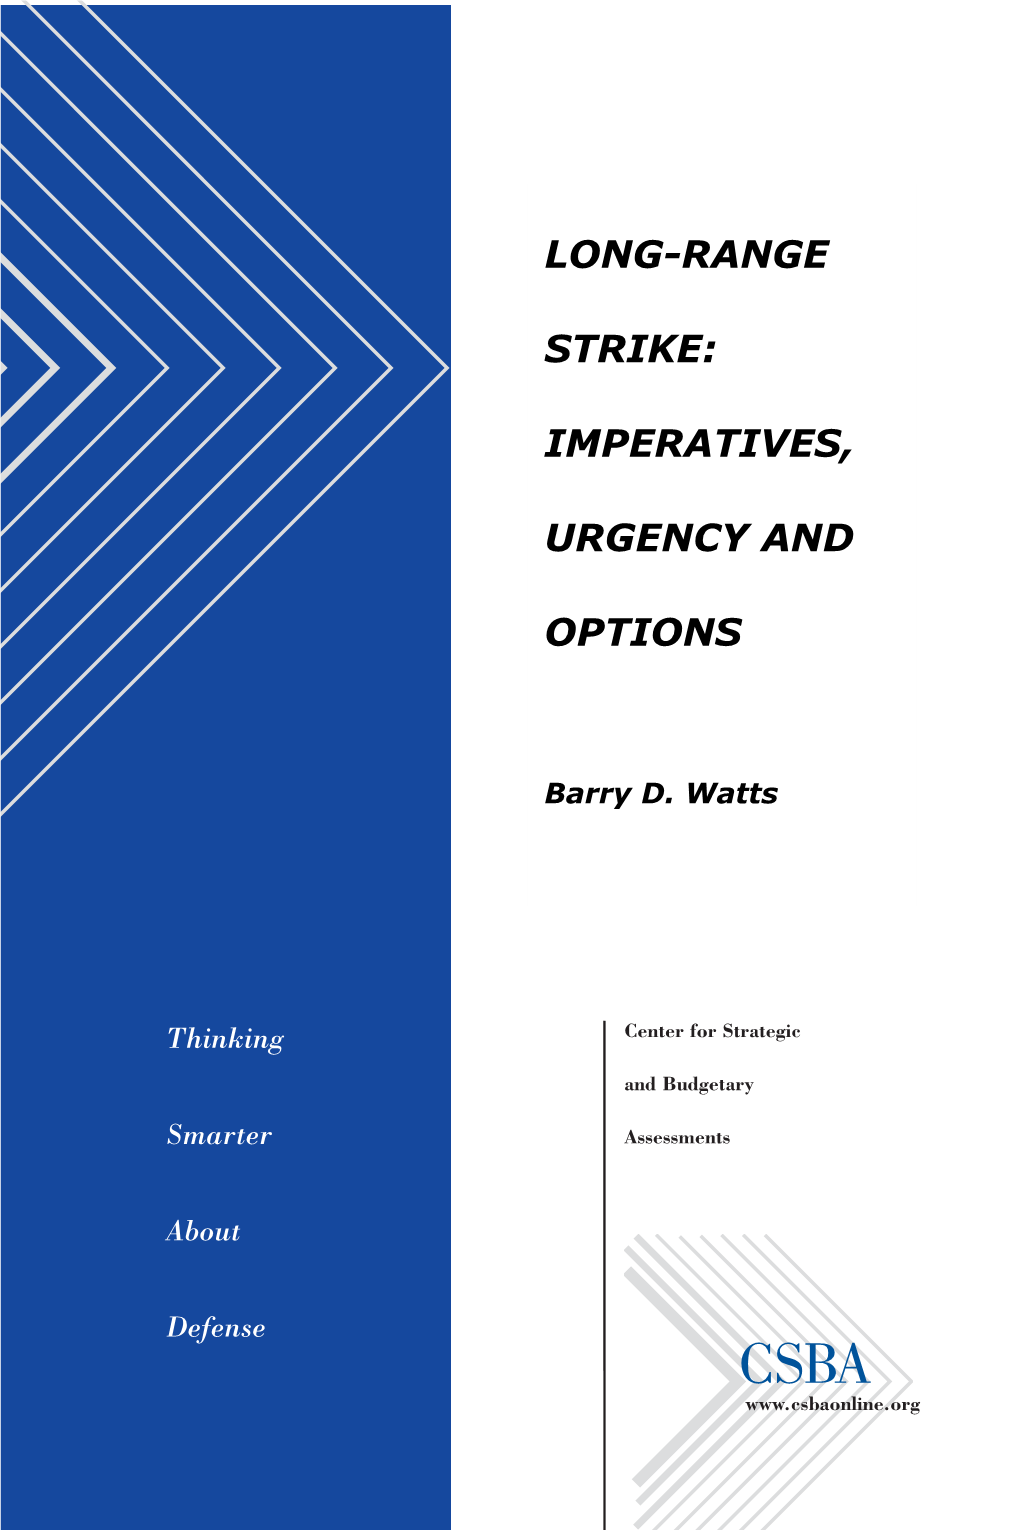 Long-Range Strike: Imperatives, Urgency and Options